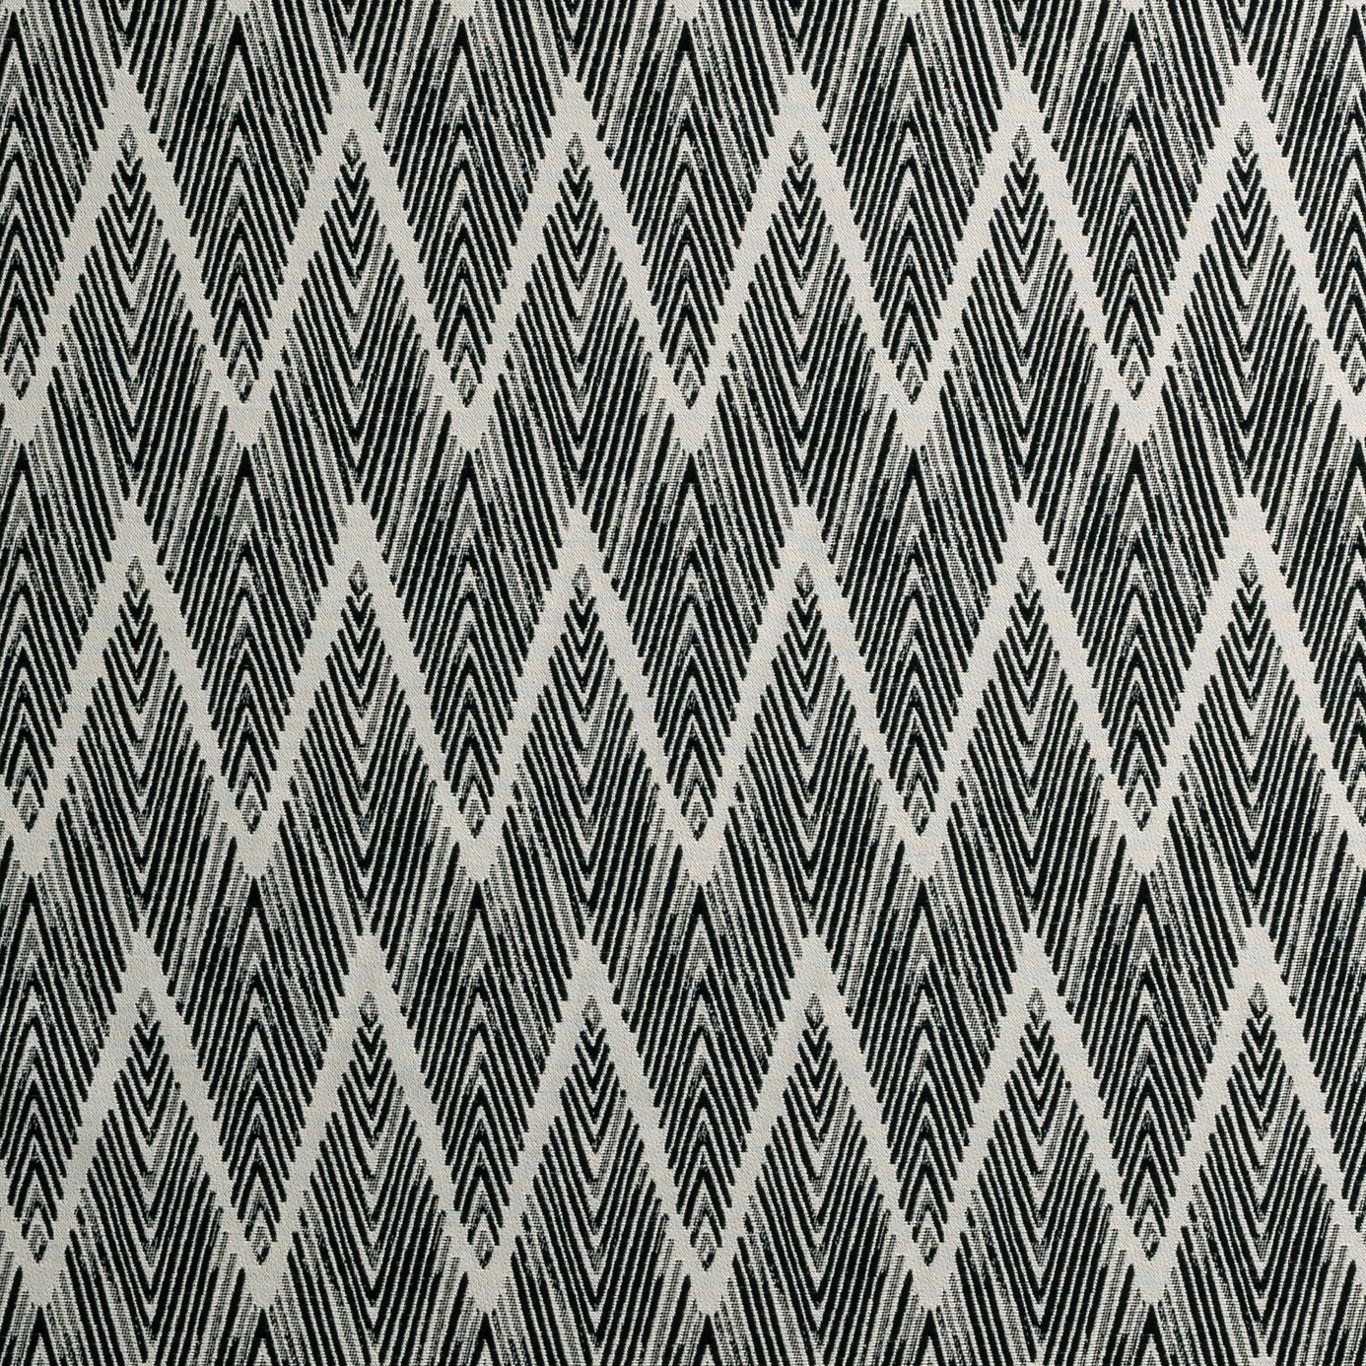 BW1022 Black/White Fabric by CNC